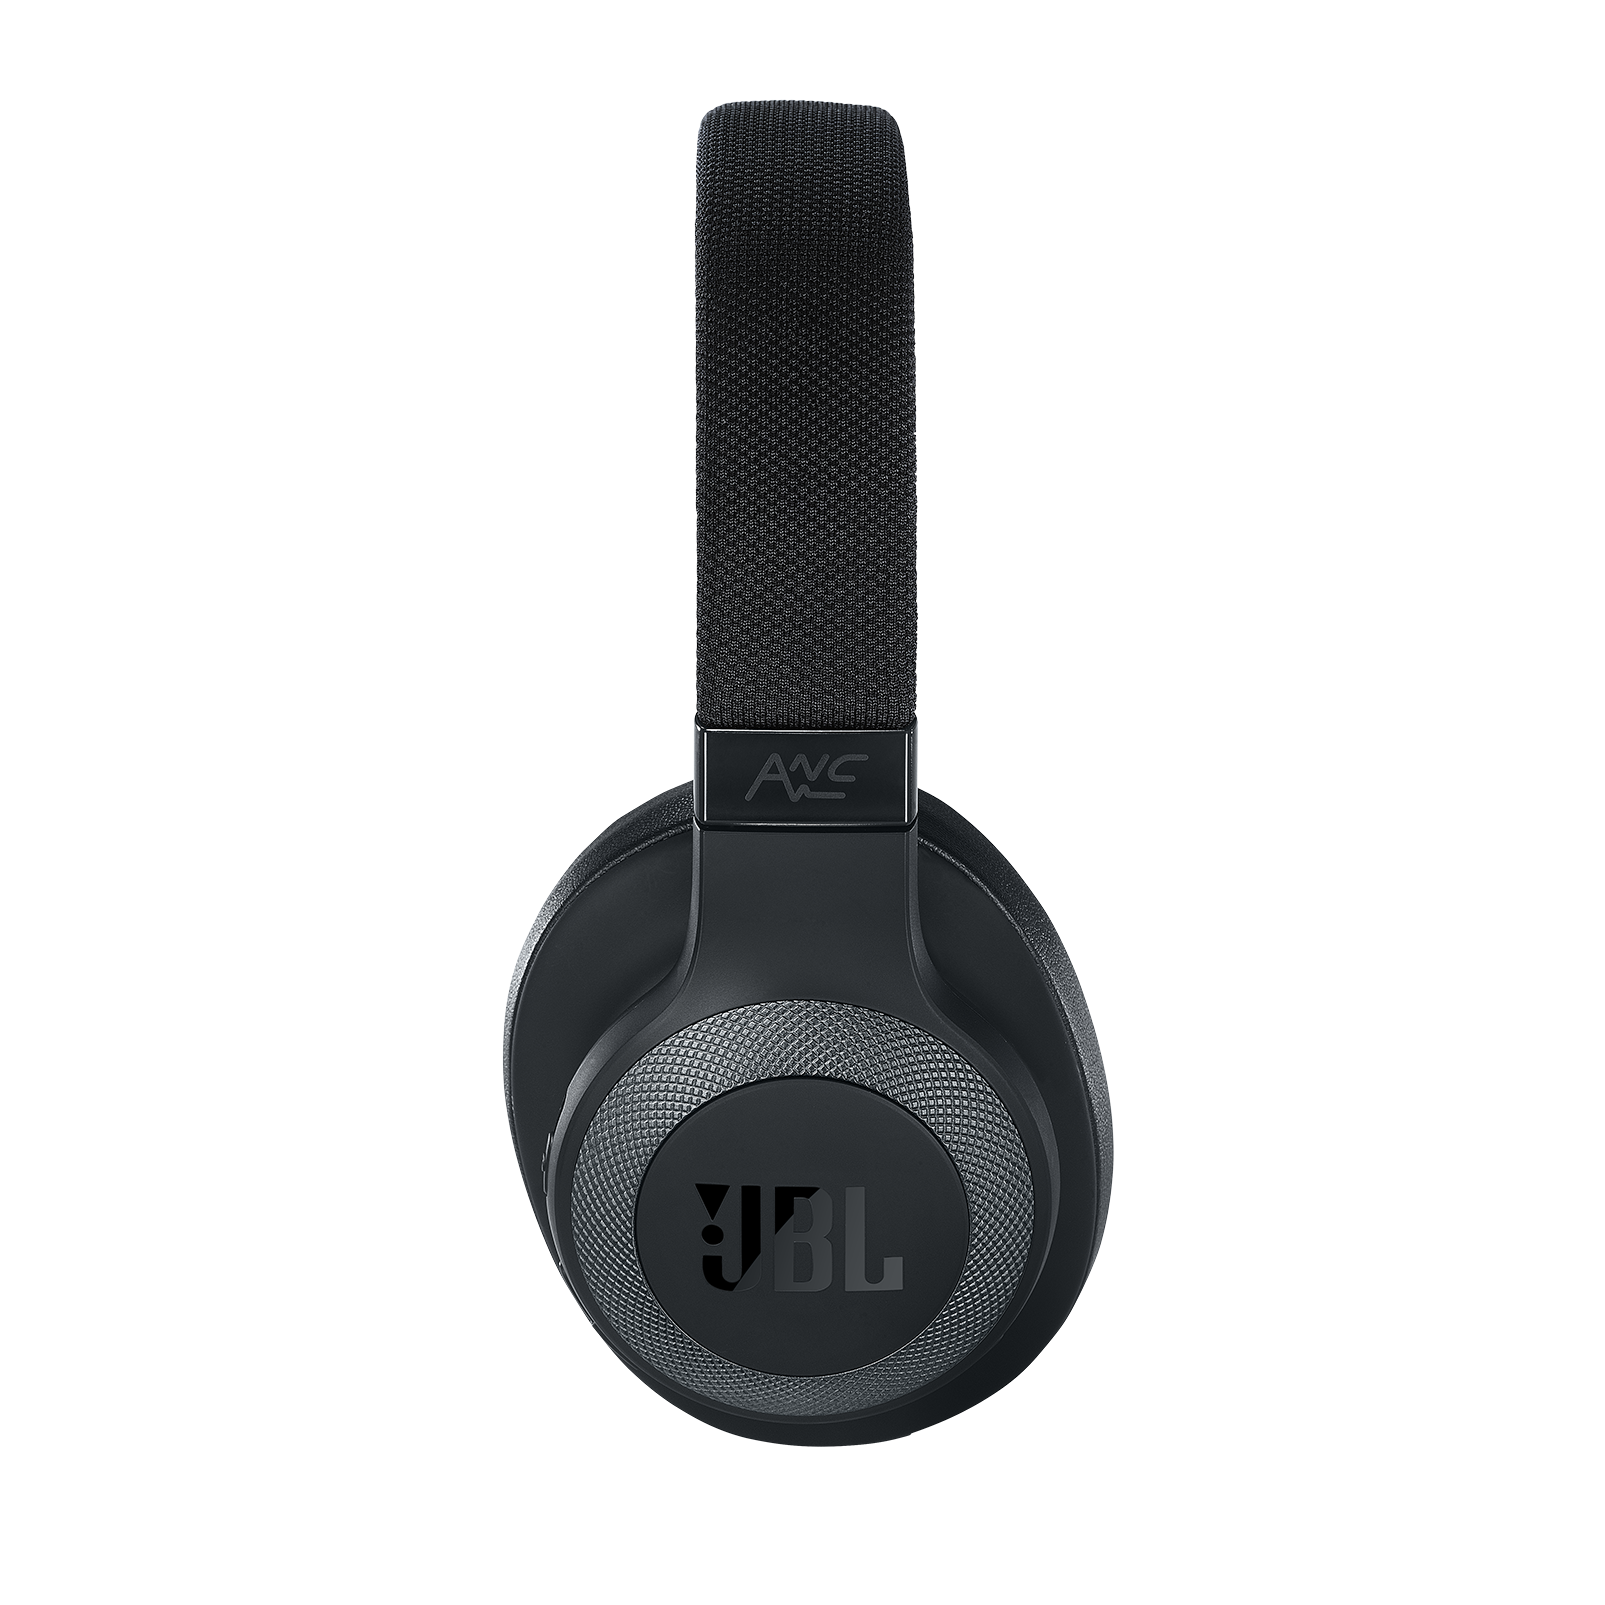 JBL E65BTNC - Black Matte - Wireless over-ear noise-cancelling headphones - Left